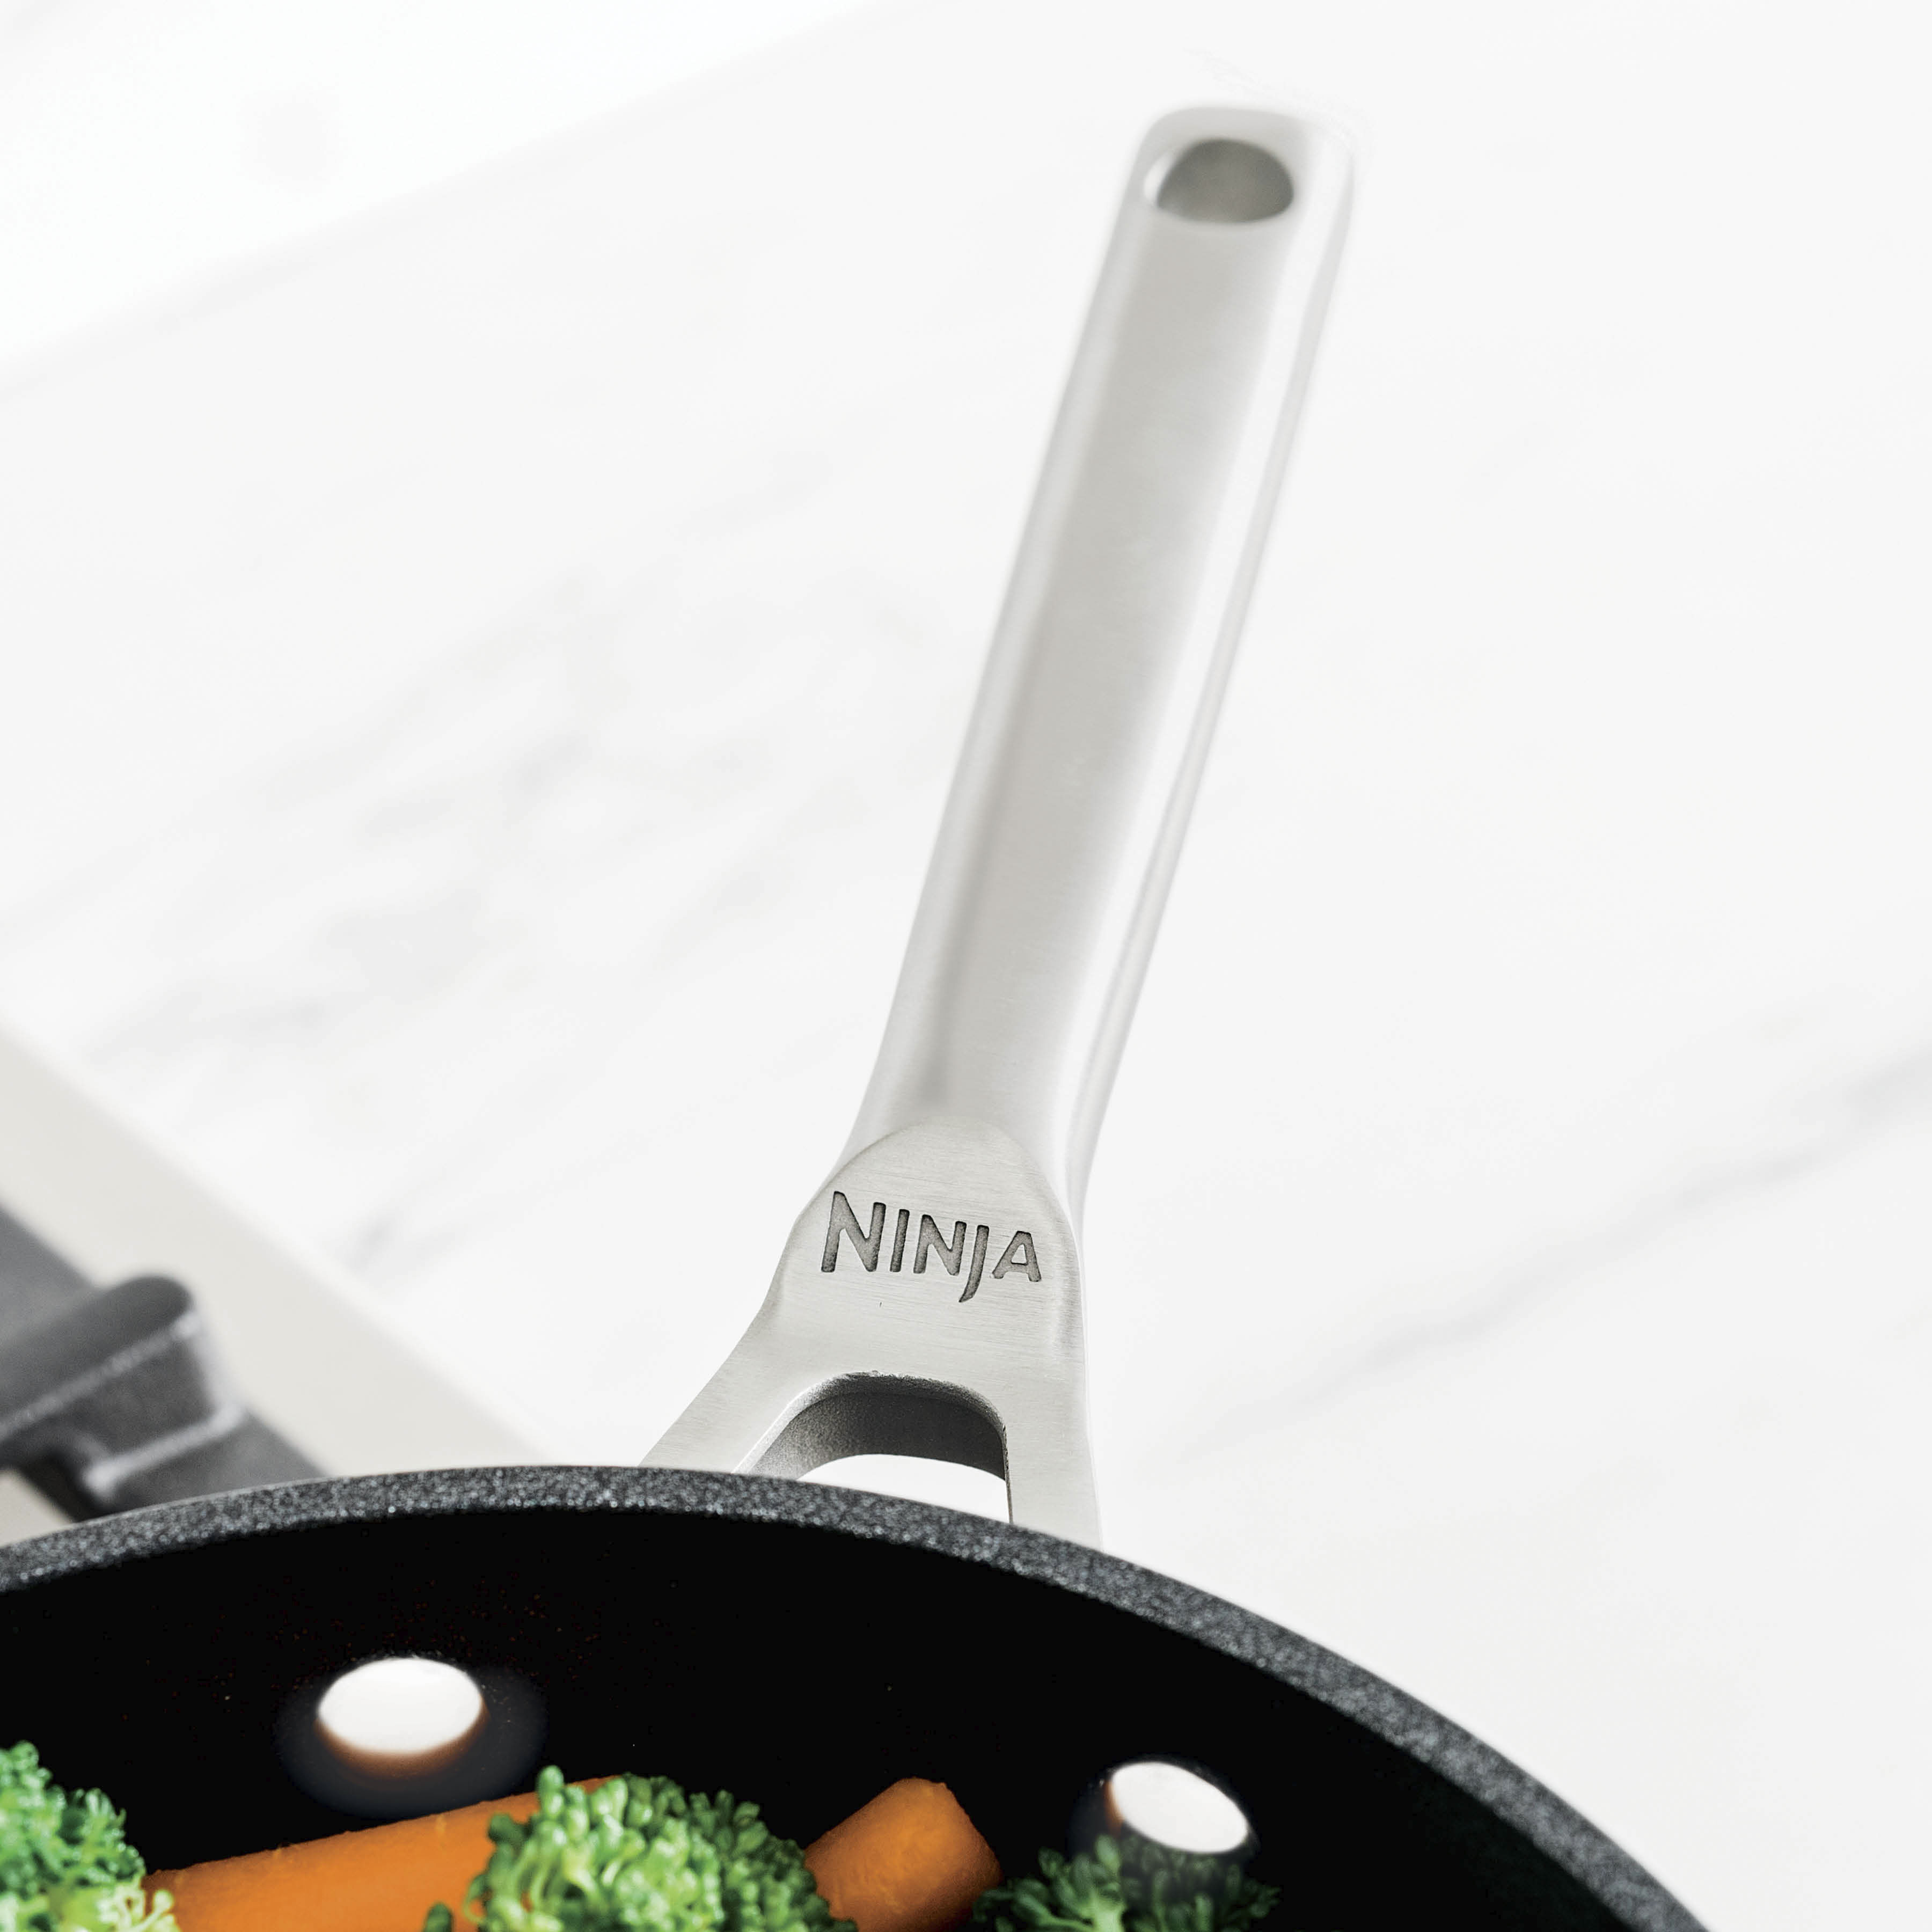 Ninja Foodi NeverStick Premium Hard-Anodized 12-Inch Fry Pan Grey C30030 -  Best Buy